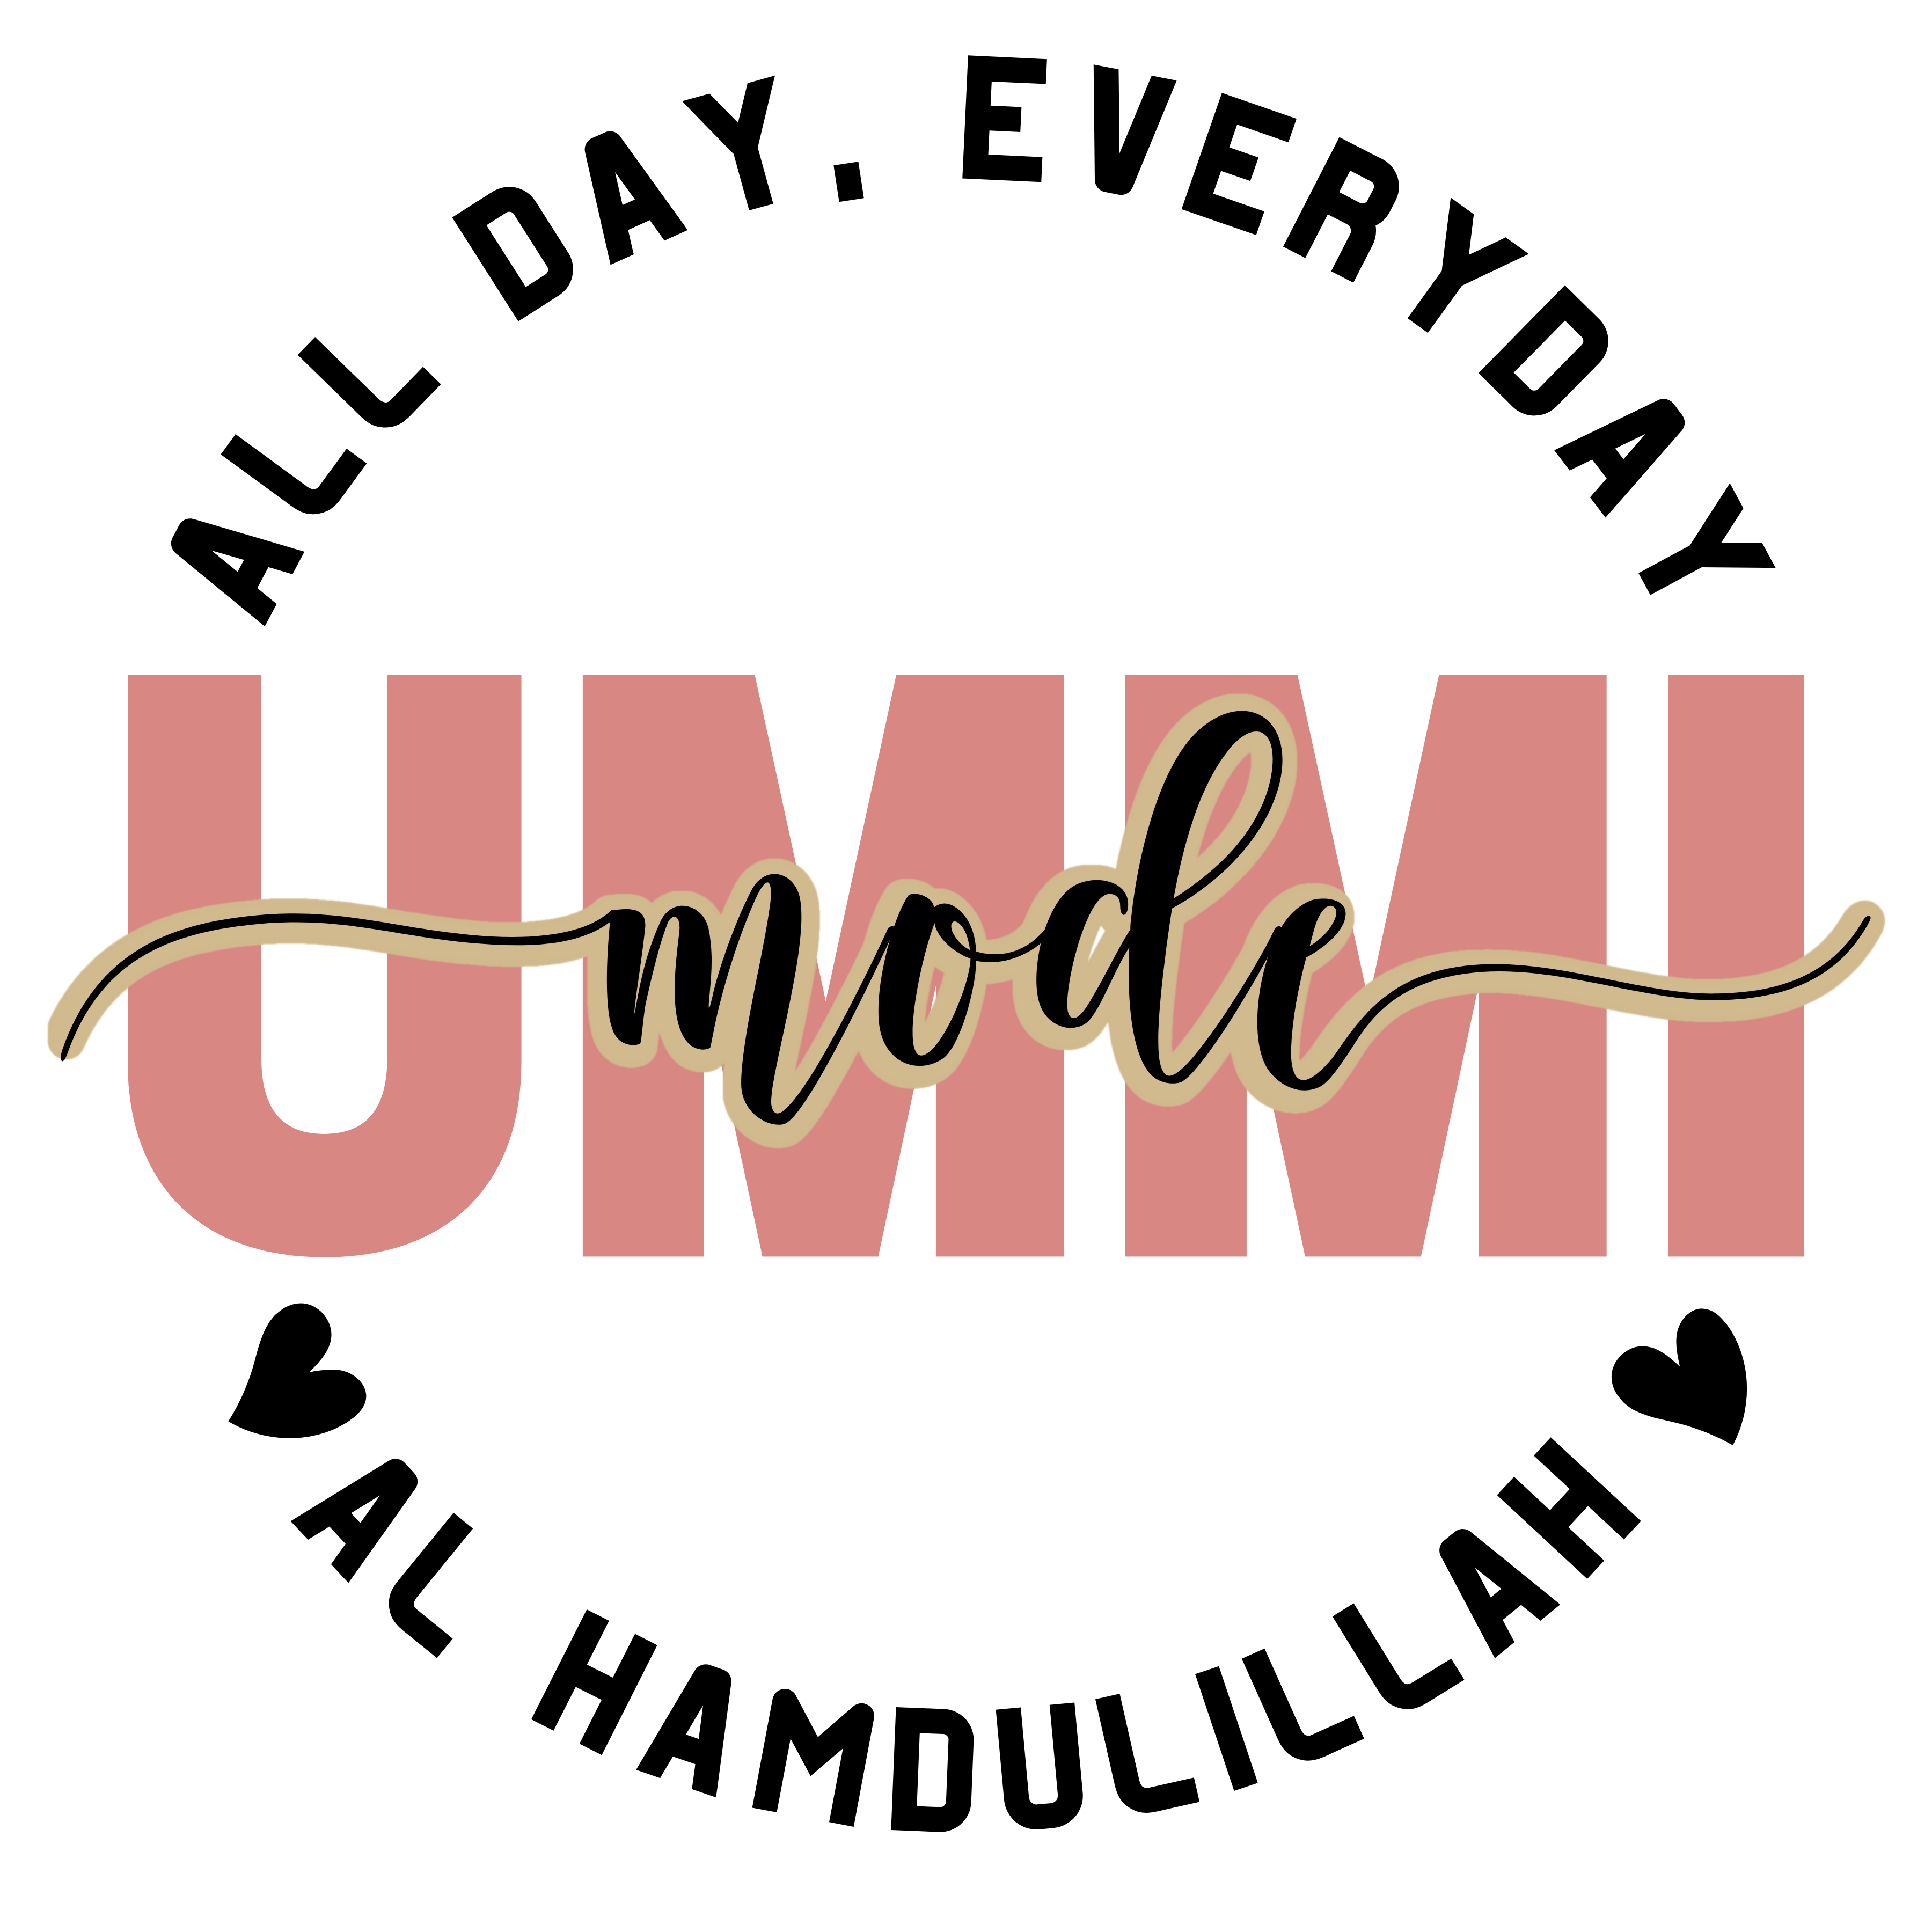 Mum / Ummi Mugs